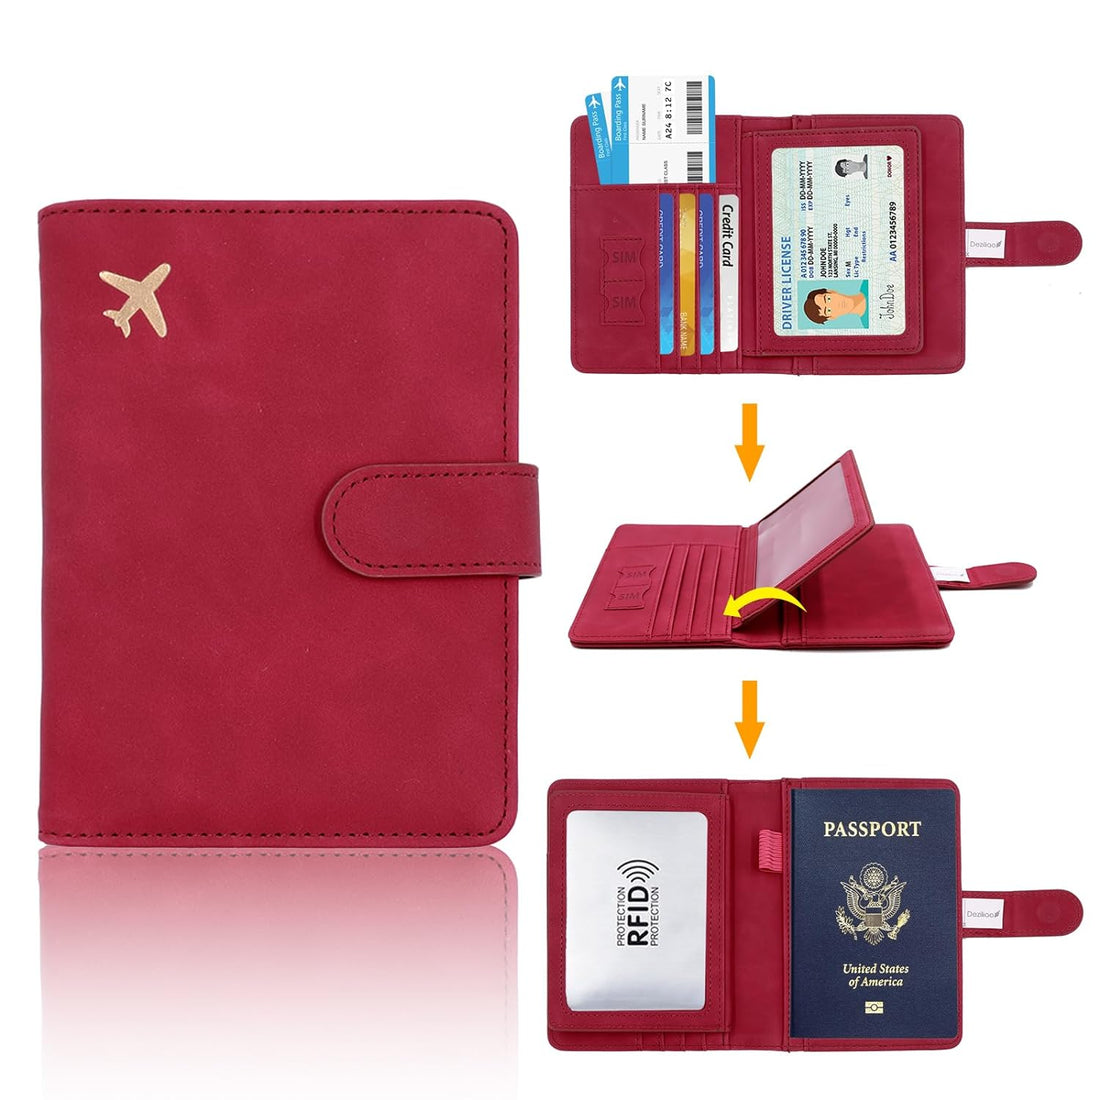 Deziliao Passport and Vaccine Card Holder Combo, PU Leather Passport Holder with Vaccine Card Slot, Passport Wallet for Men and Women…, DE0058Peach Red, Upgrade